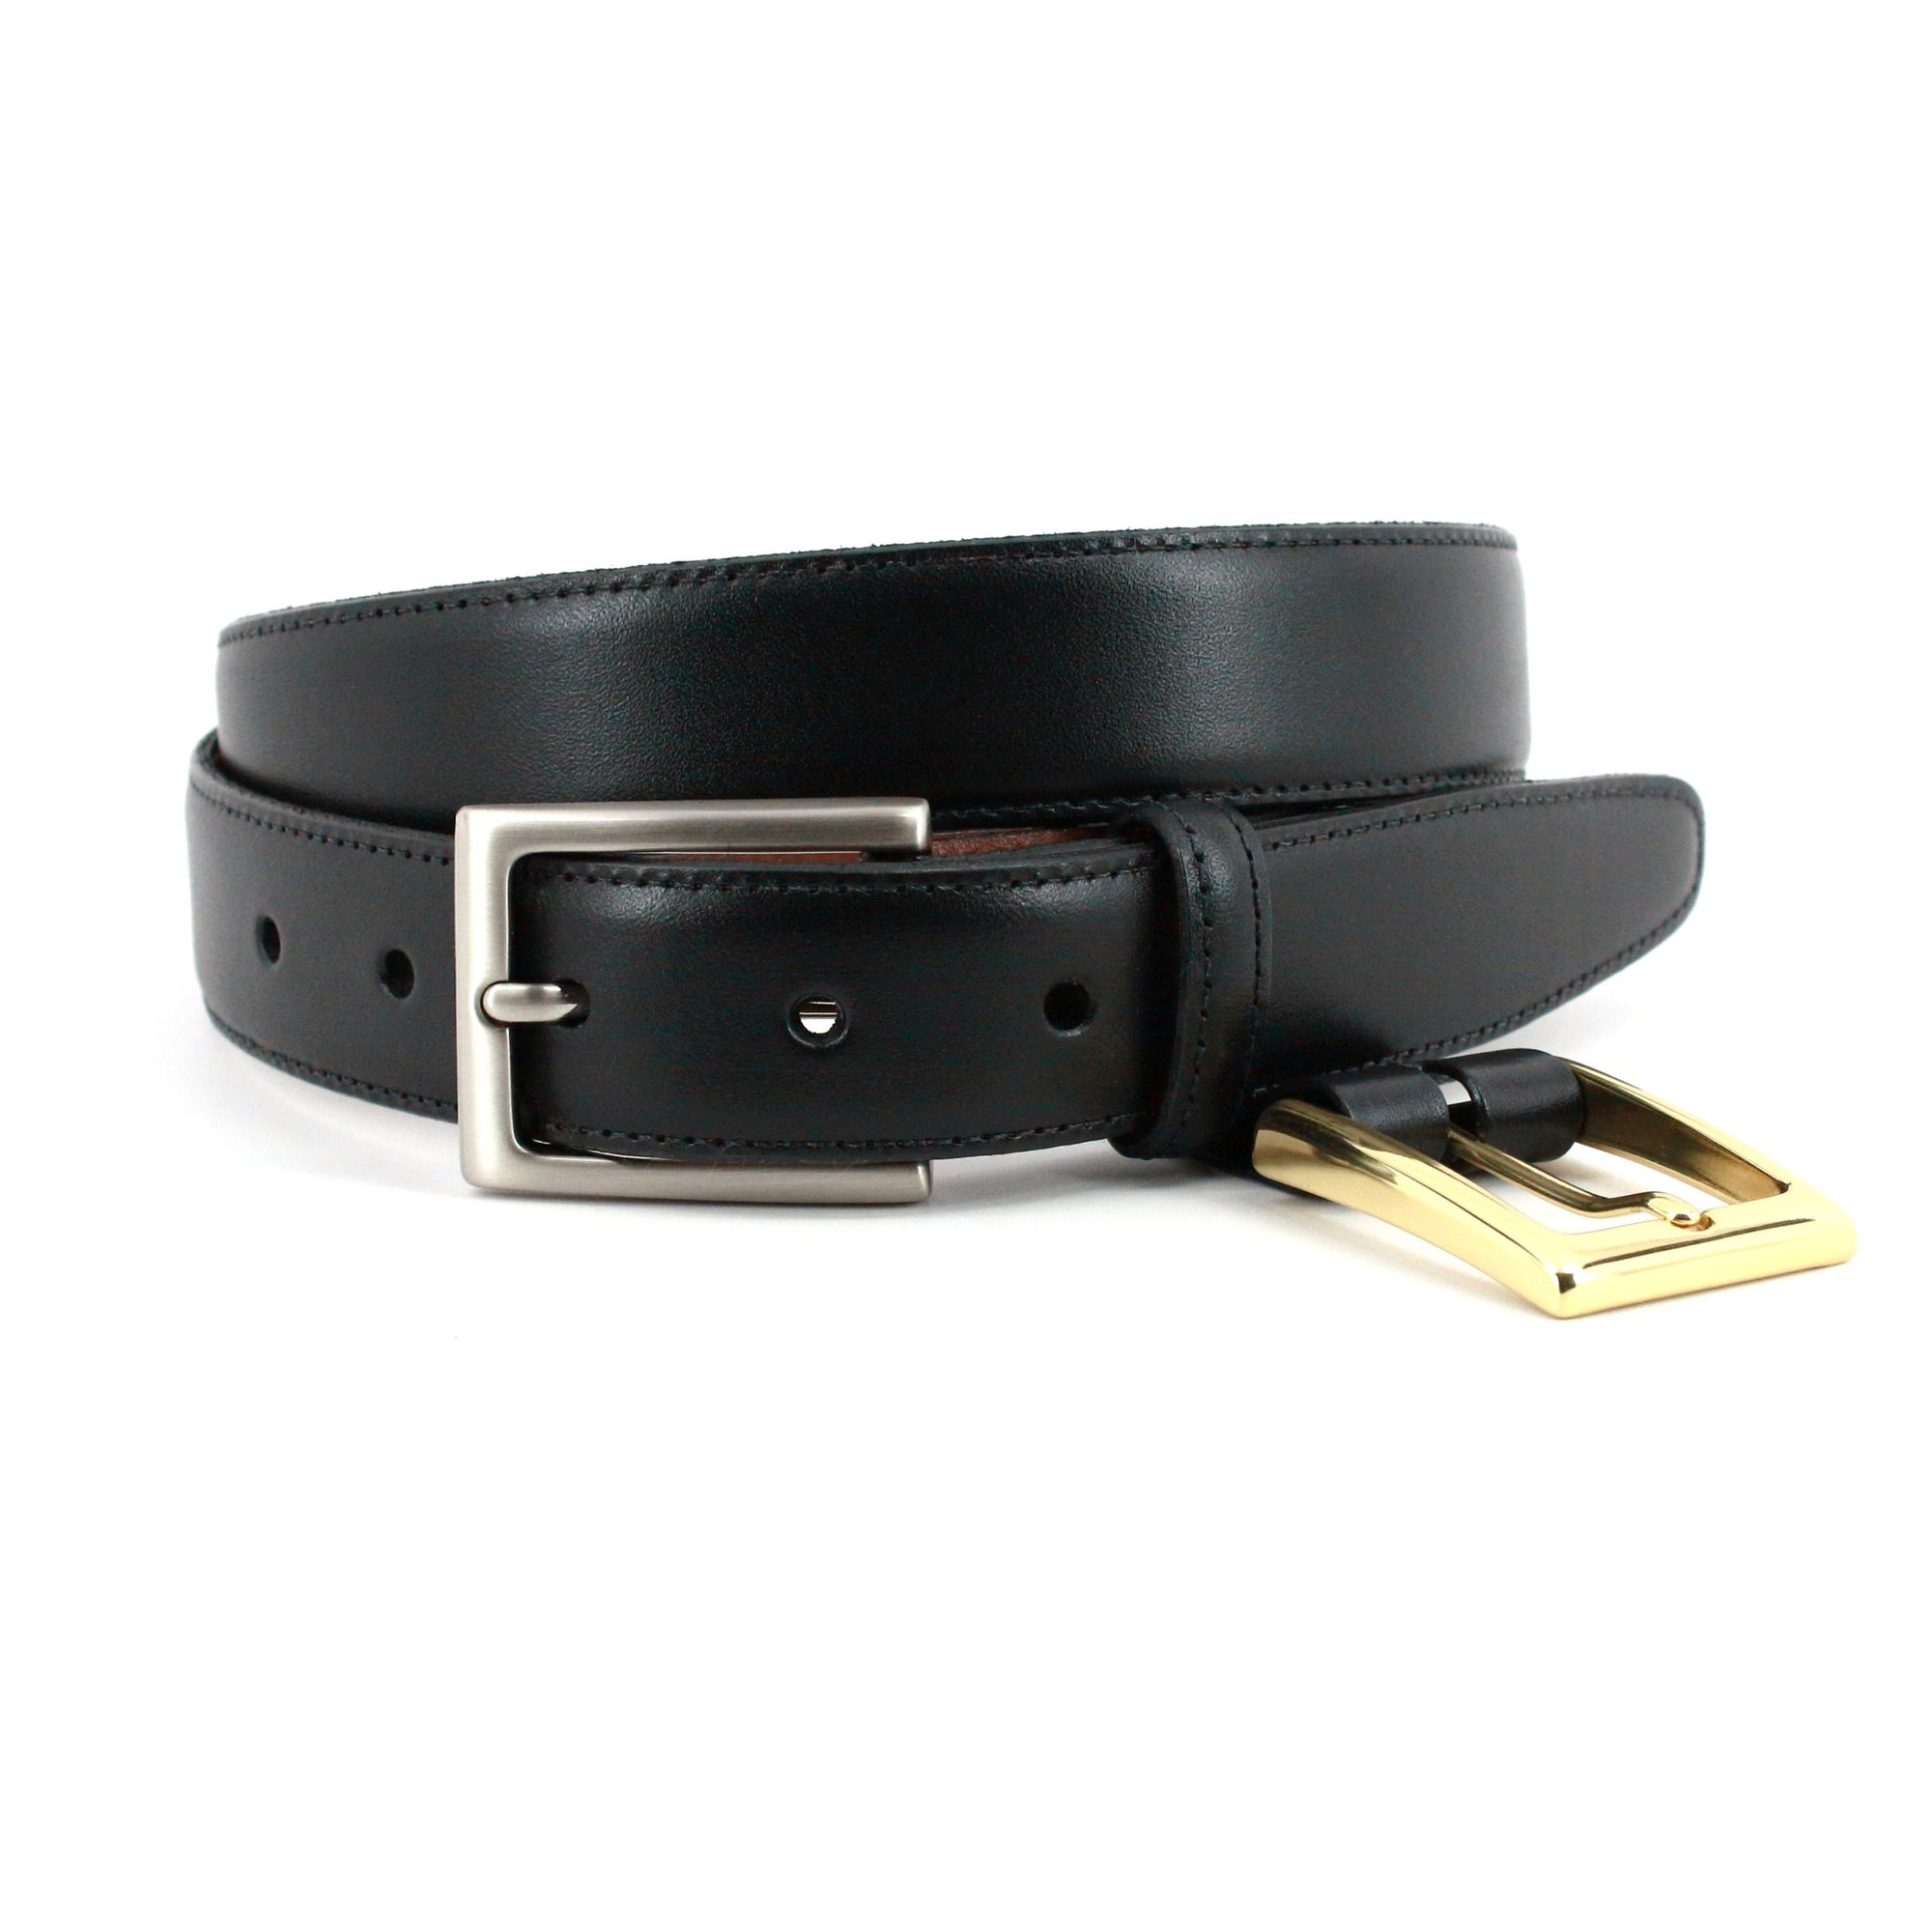 Glazed Kipskin Belt with Interchangeable Buckles in Black by Torino Leather